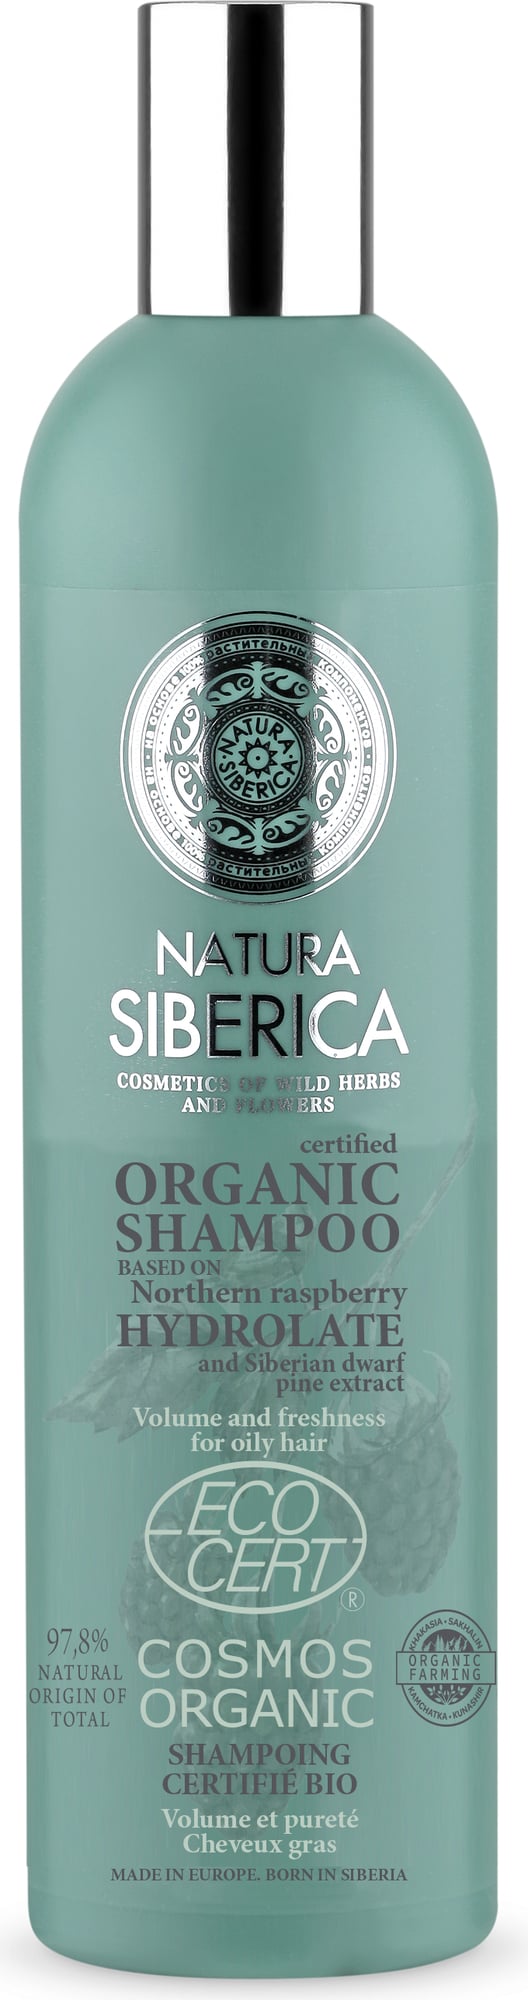 natura siberica szampon 100 ml